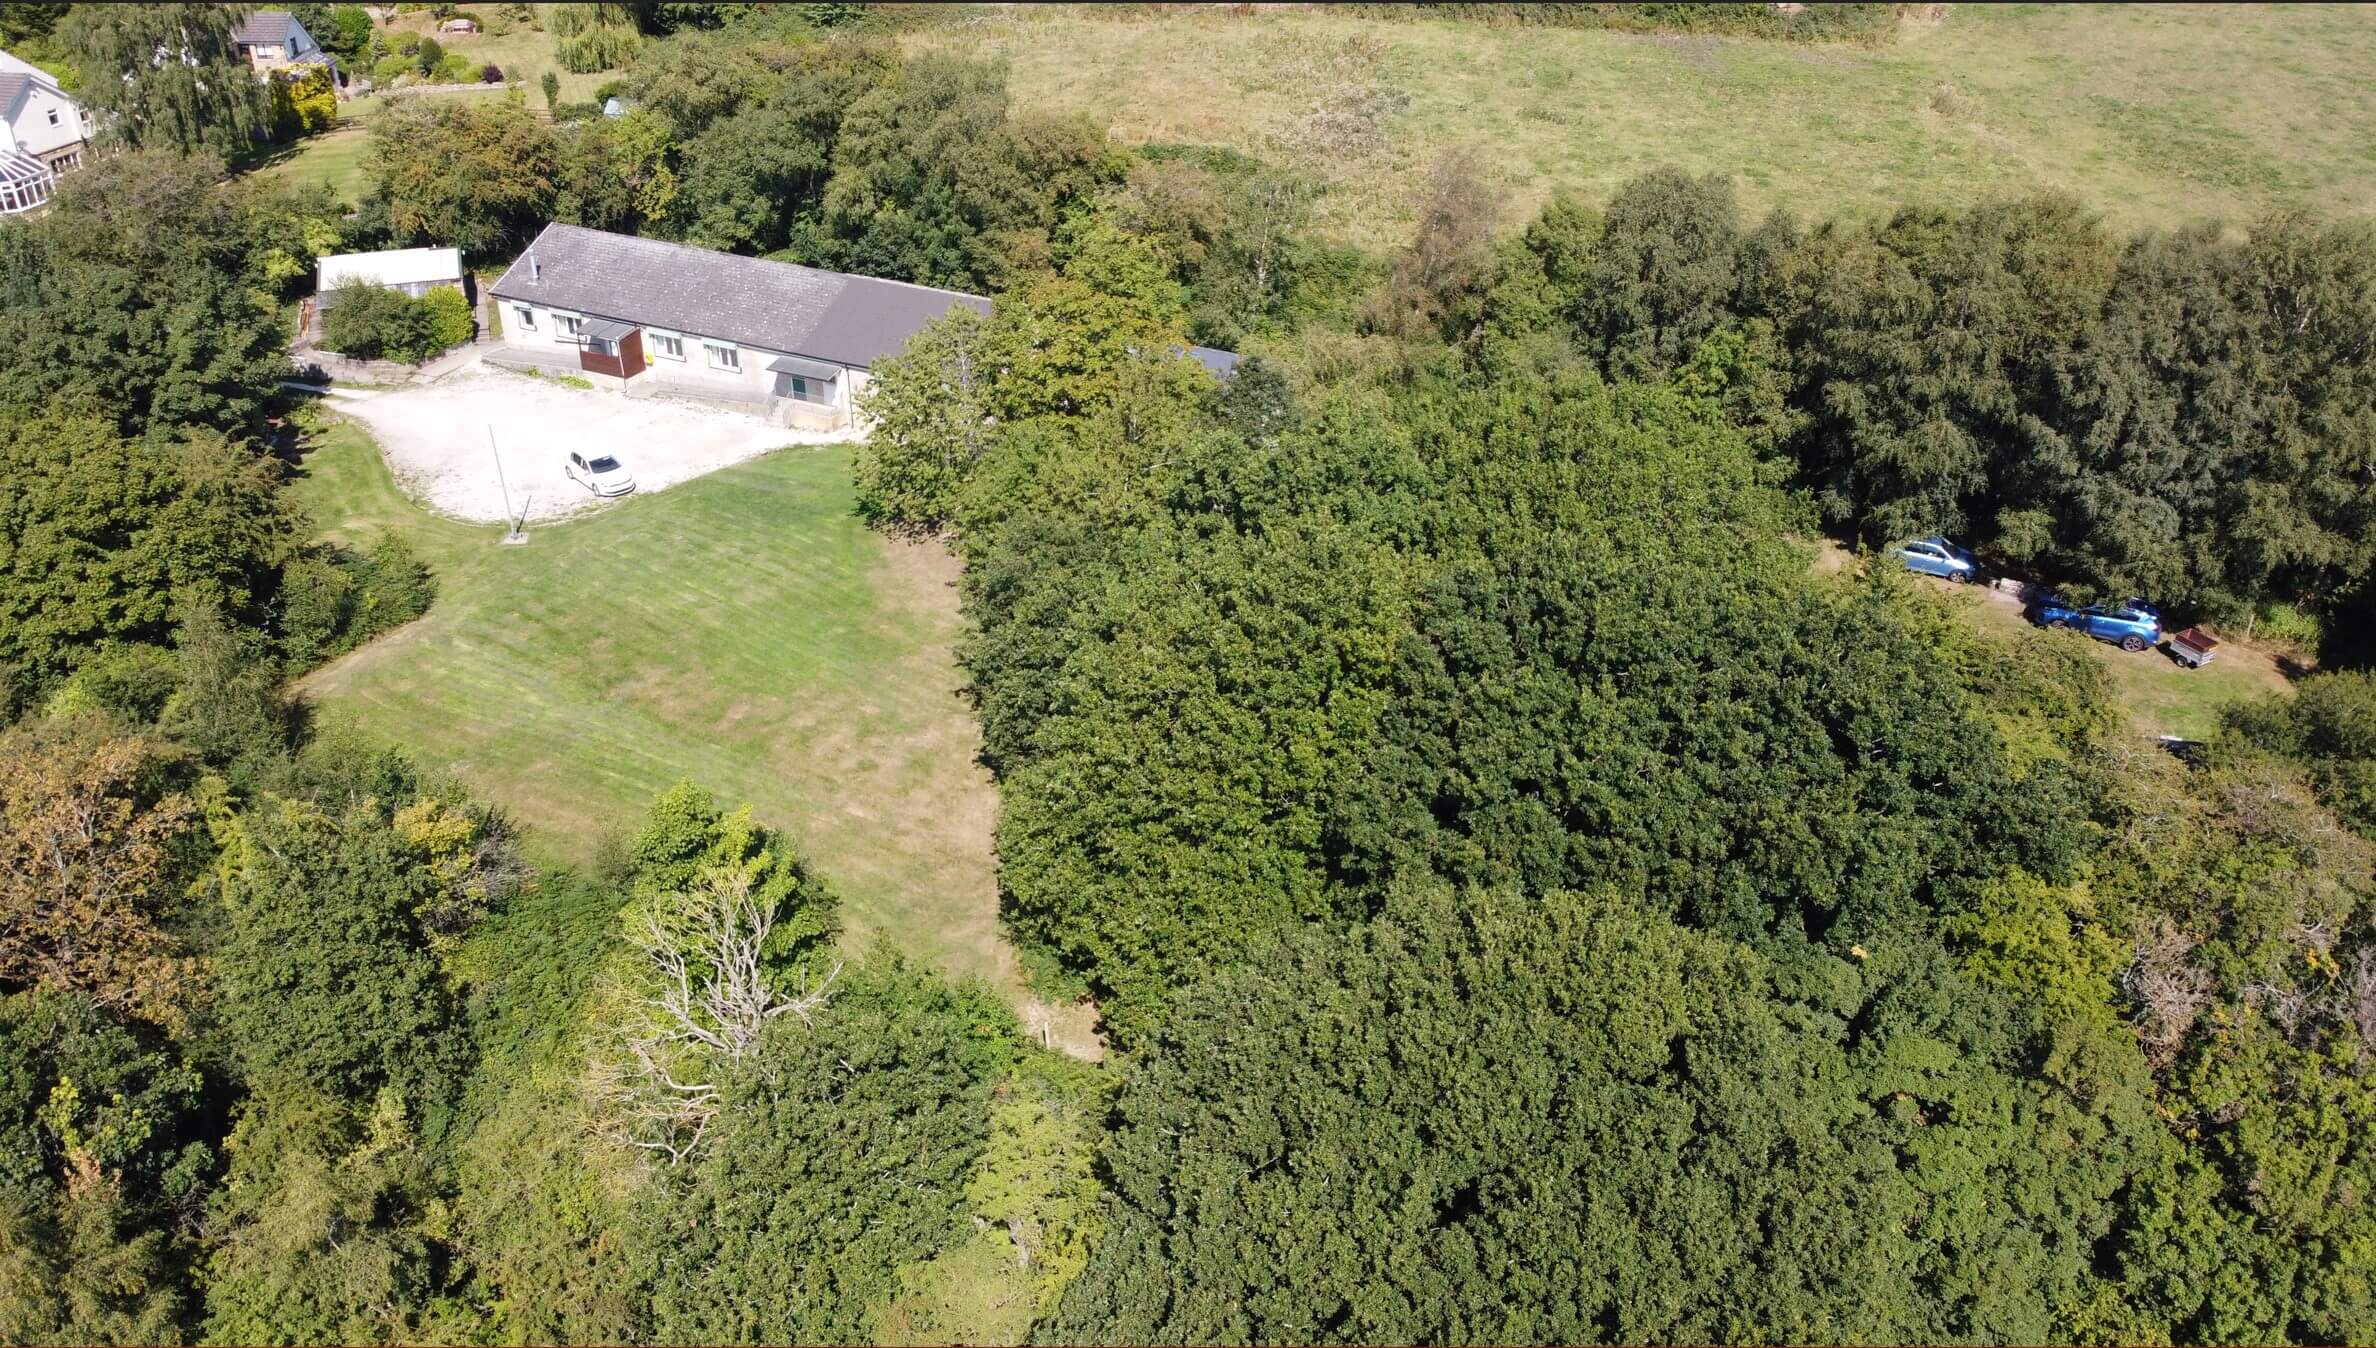 Culy Hill Campsite and Centre Drone